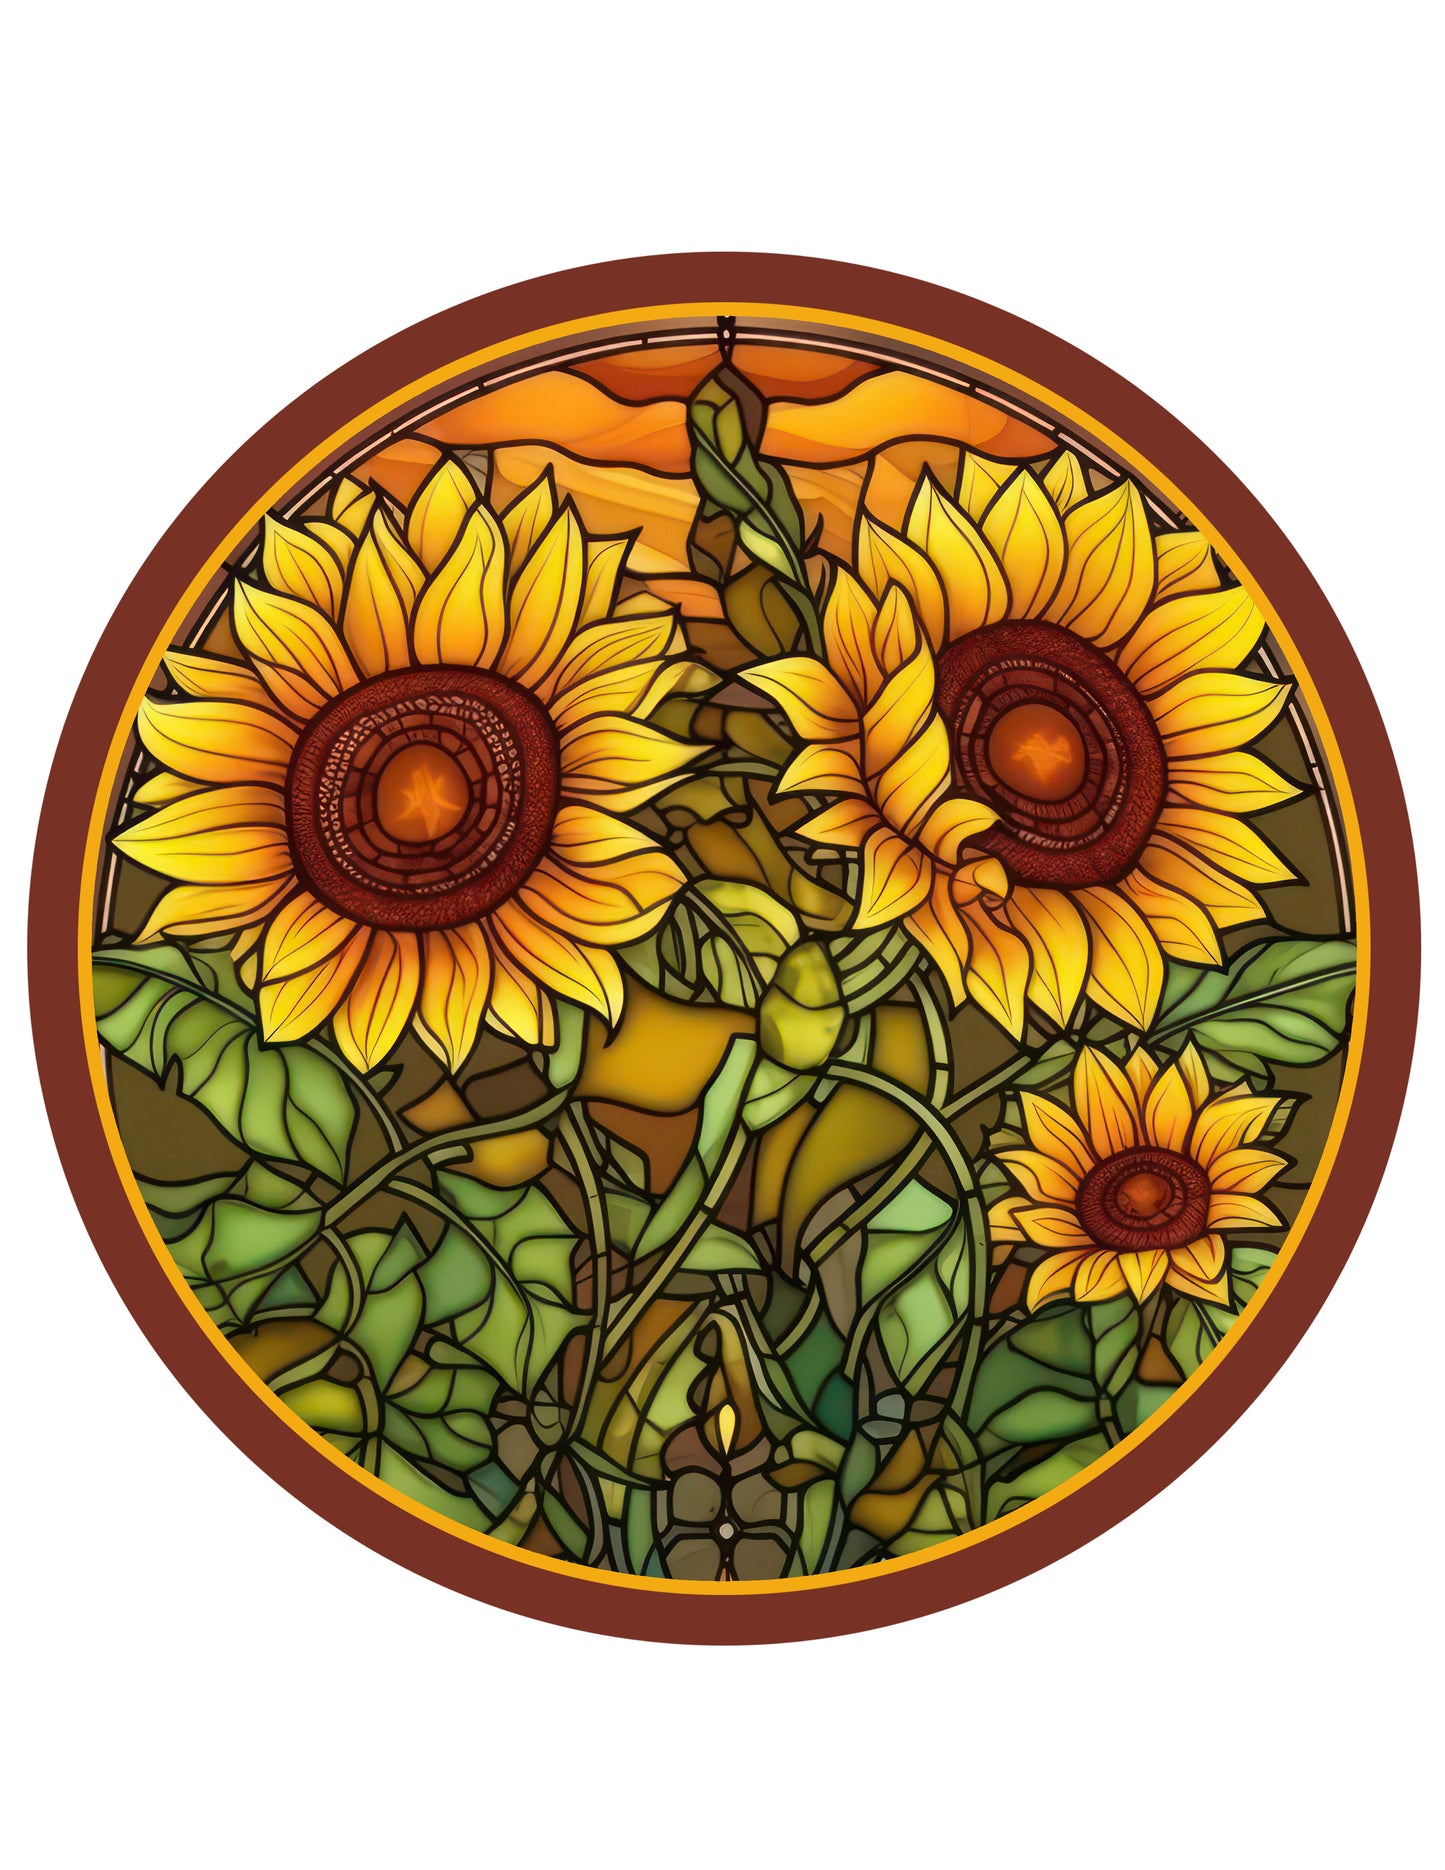 Sunflower Art Snap Charm 20mm